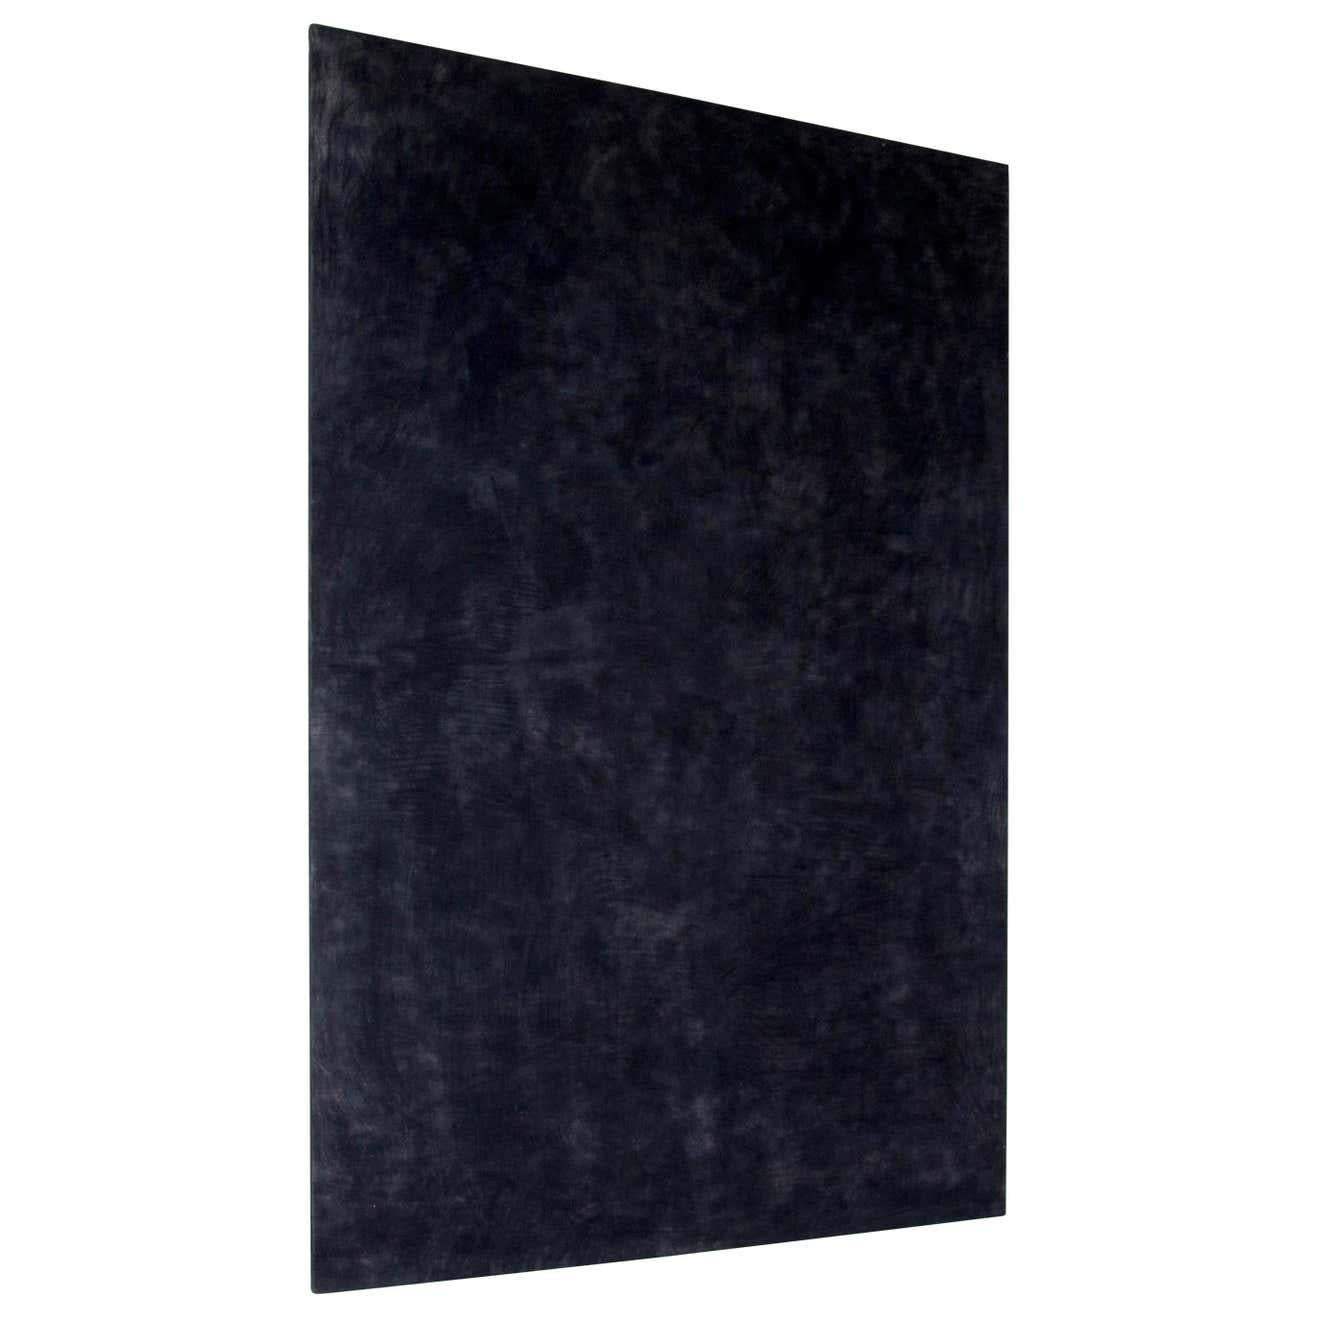 Enrico Dellatorre Contemporary Modern Black Monochrome Large Painting 9